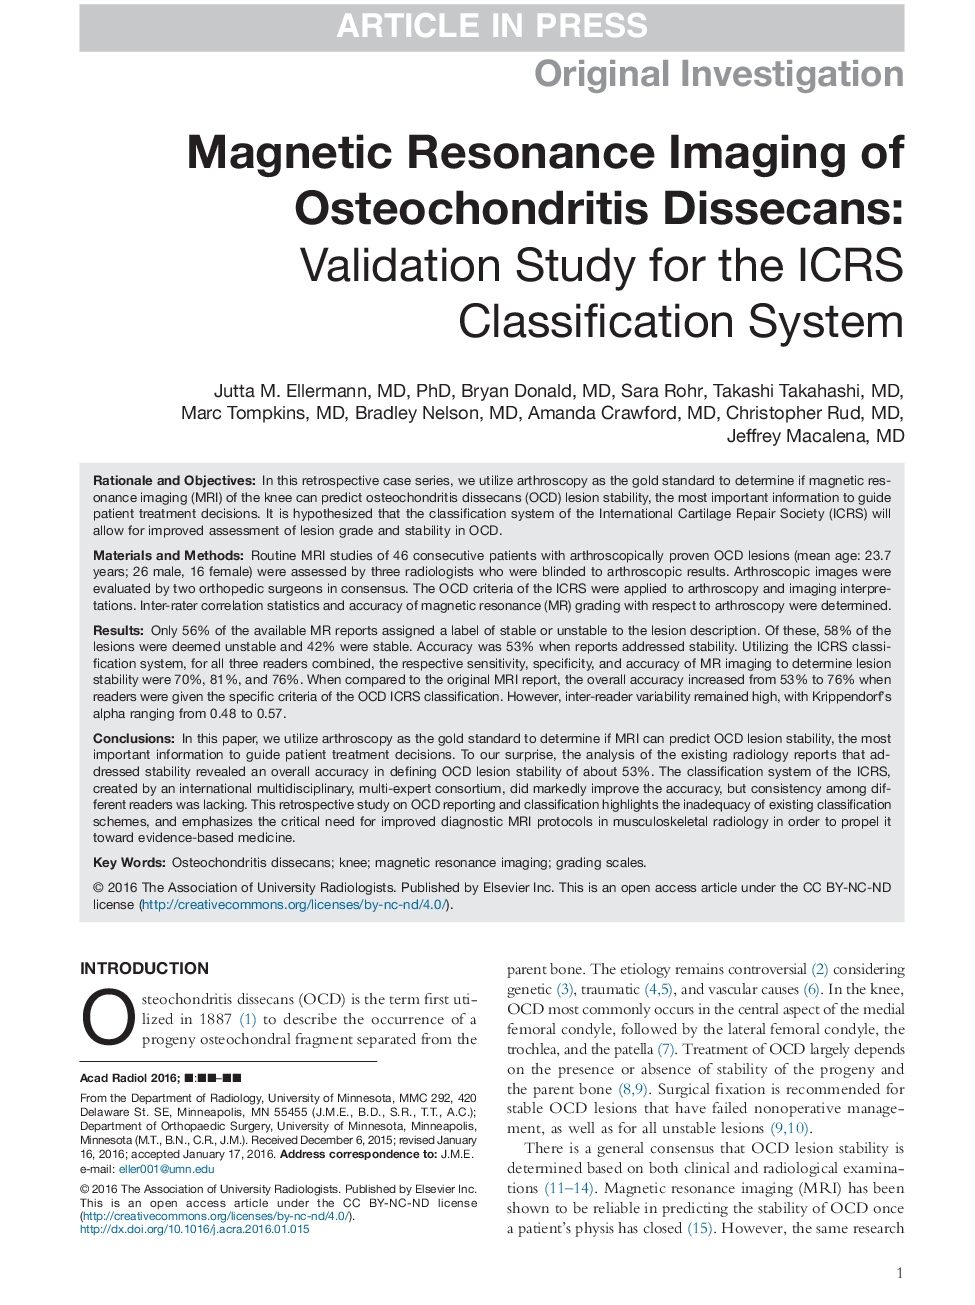 Magnetic Resonance Imaging of Osteochondritis Dissecans